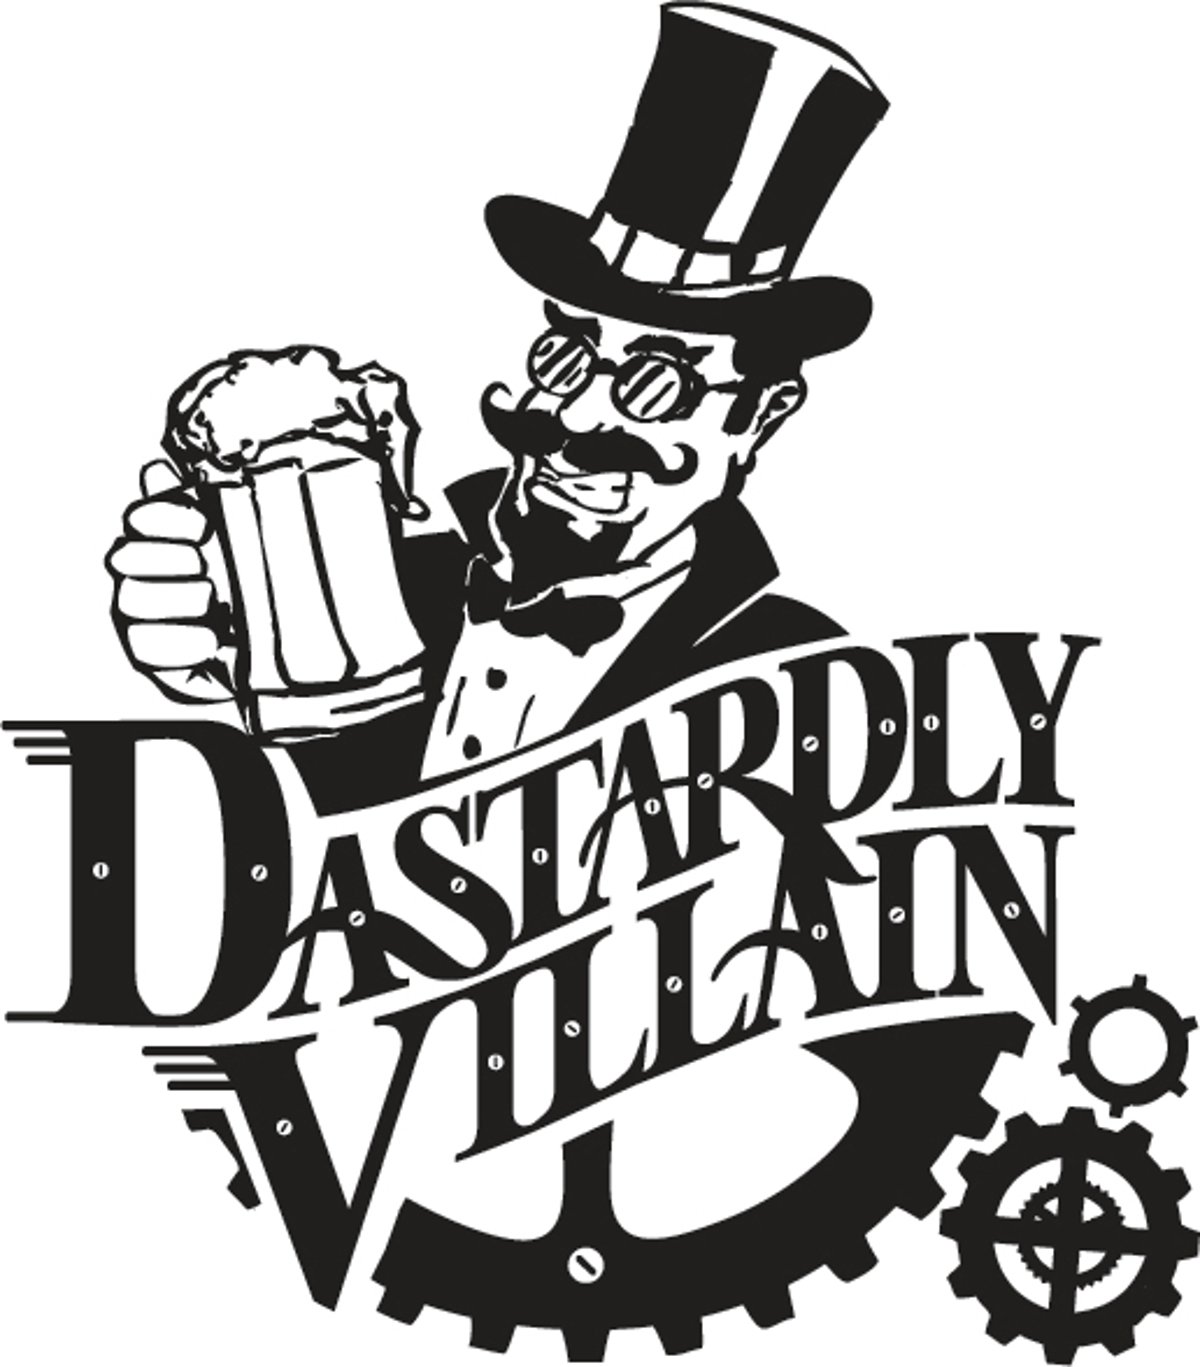 (c) Dastardlyvillain.com